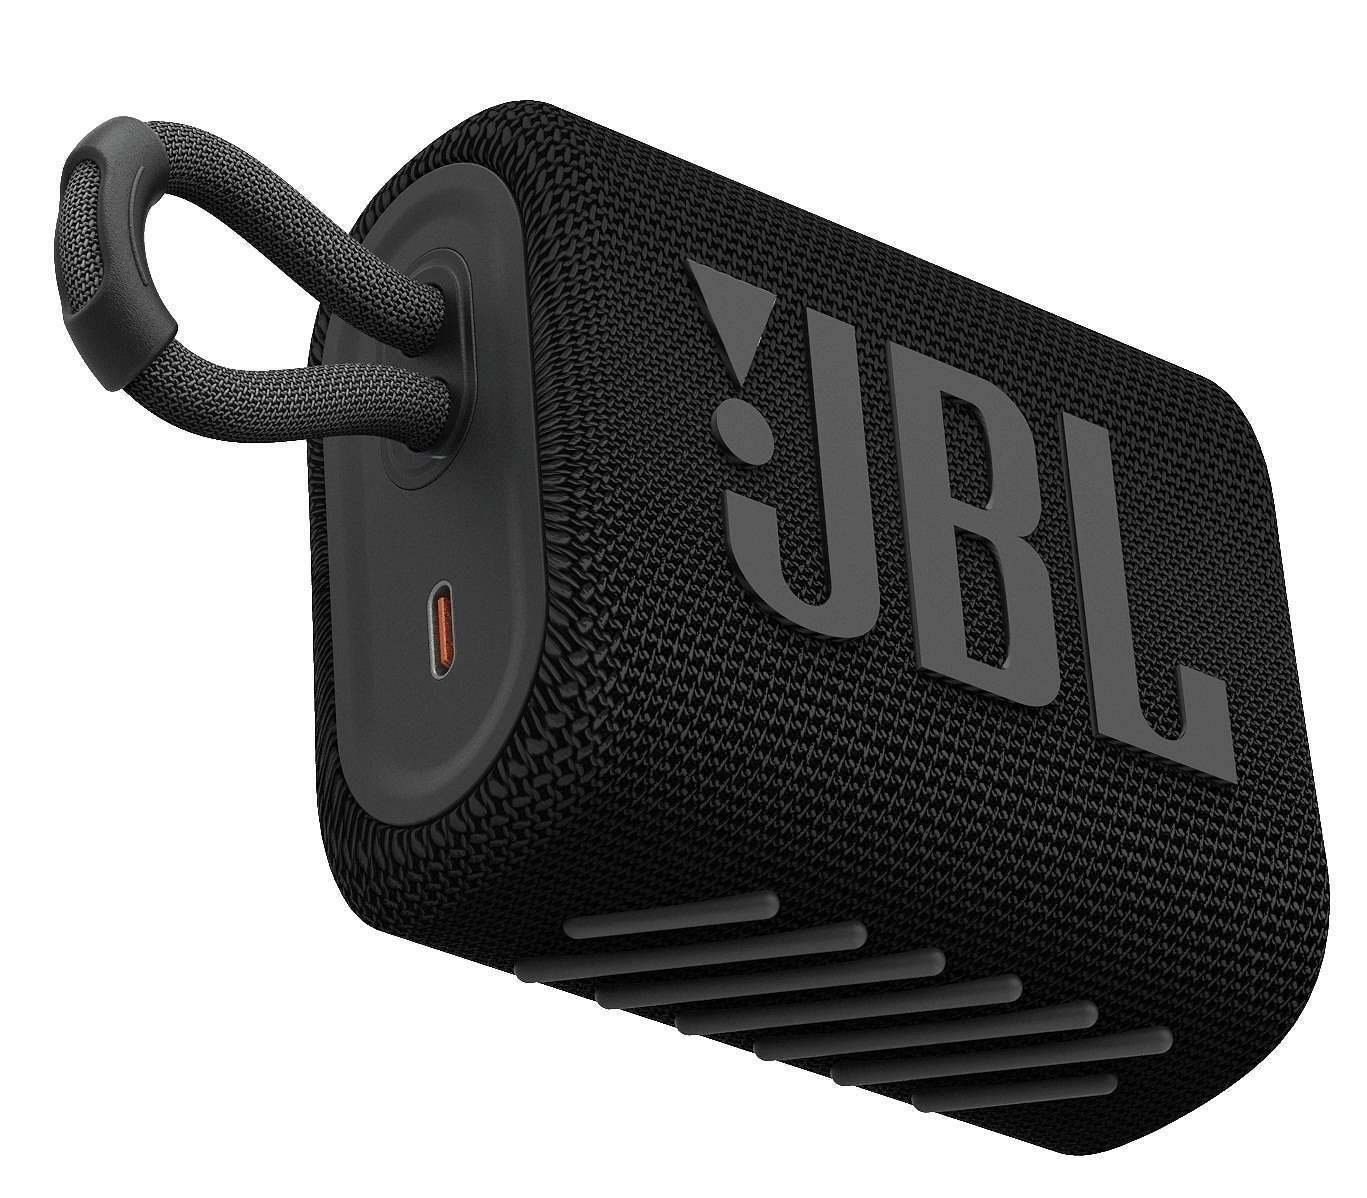 JBL GO 3 Portable Bluetooth Speaker - Black